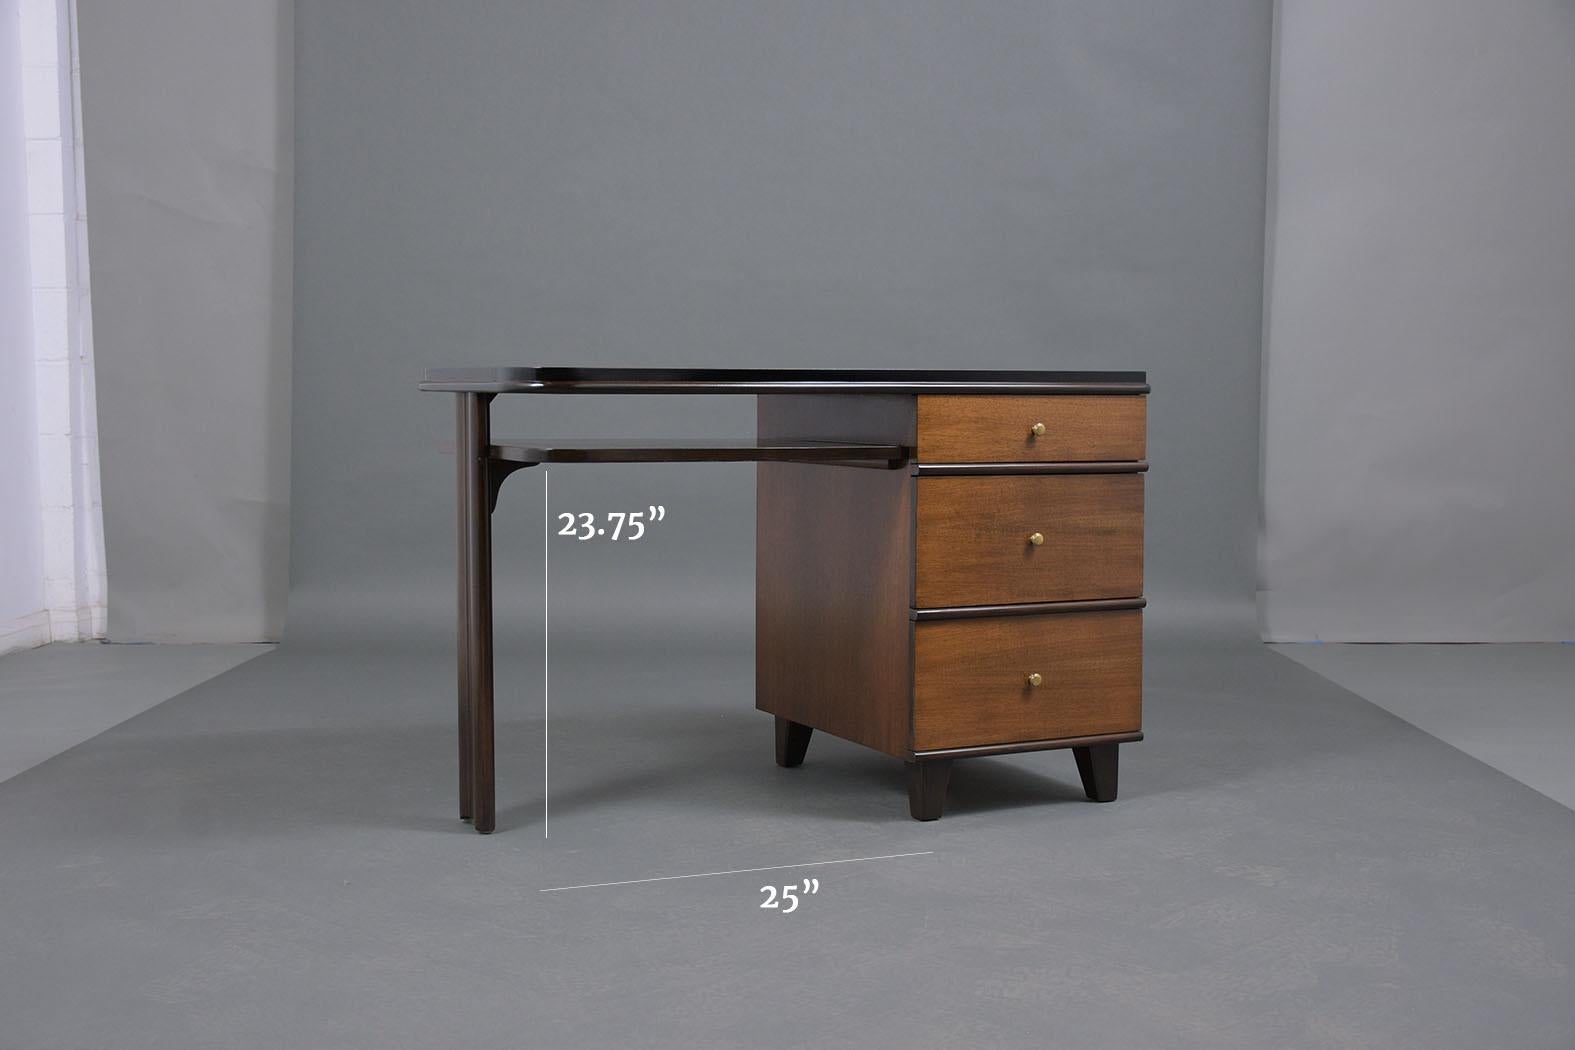 1950s Art Deco Pedestal Desk in Walnut & Ebonized Finish with Brass Accents For Sale 4